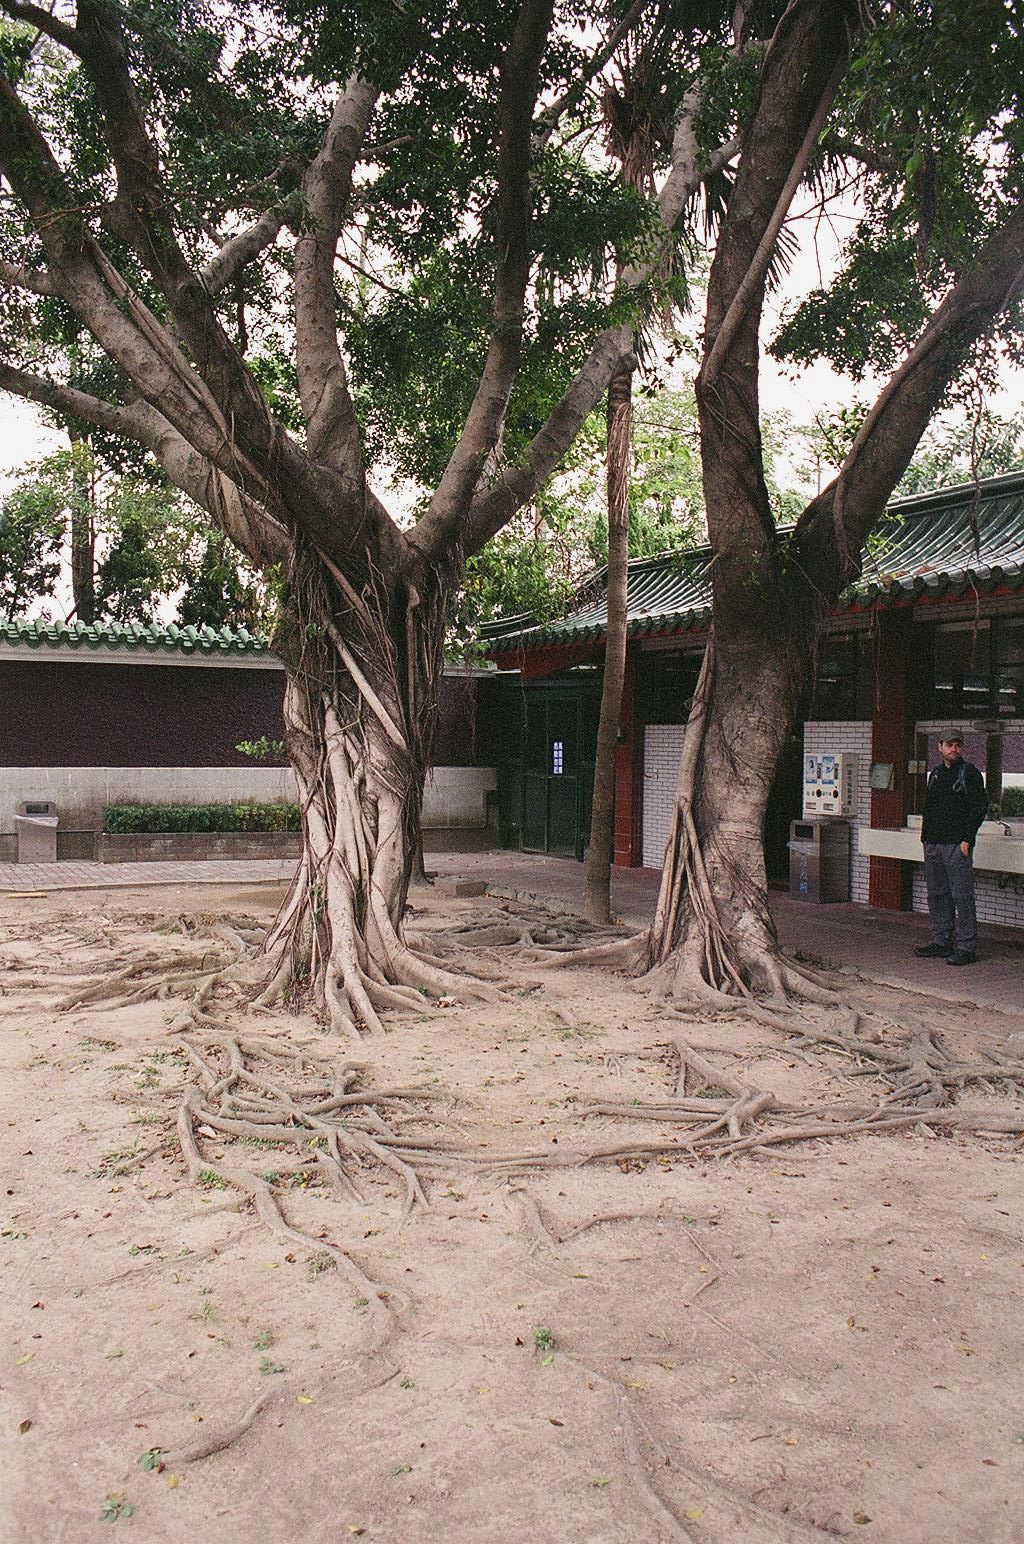 fotka / image pamatnik padlych, vojenske muzeum, Taipei, Taiwan